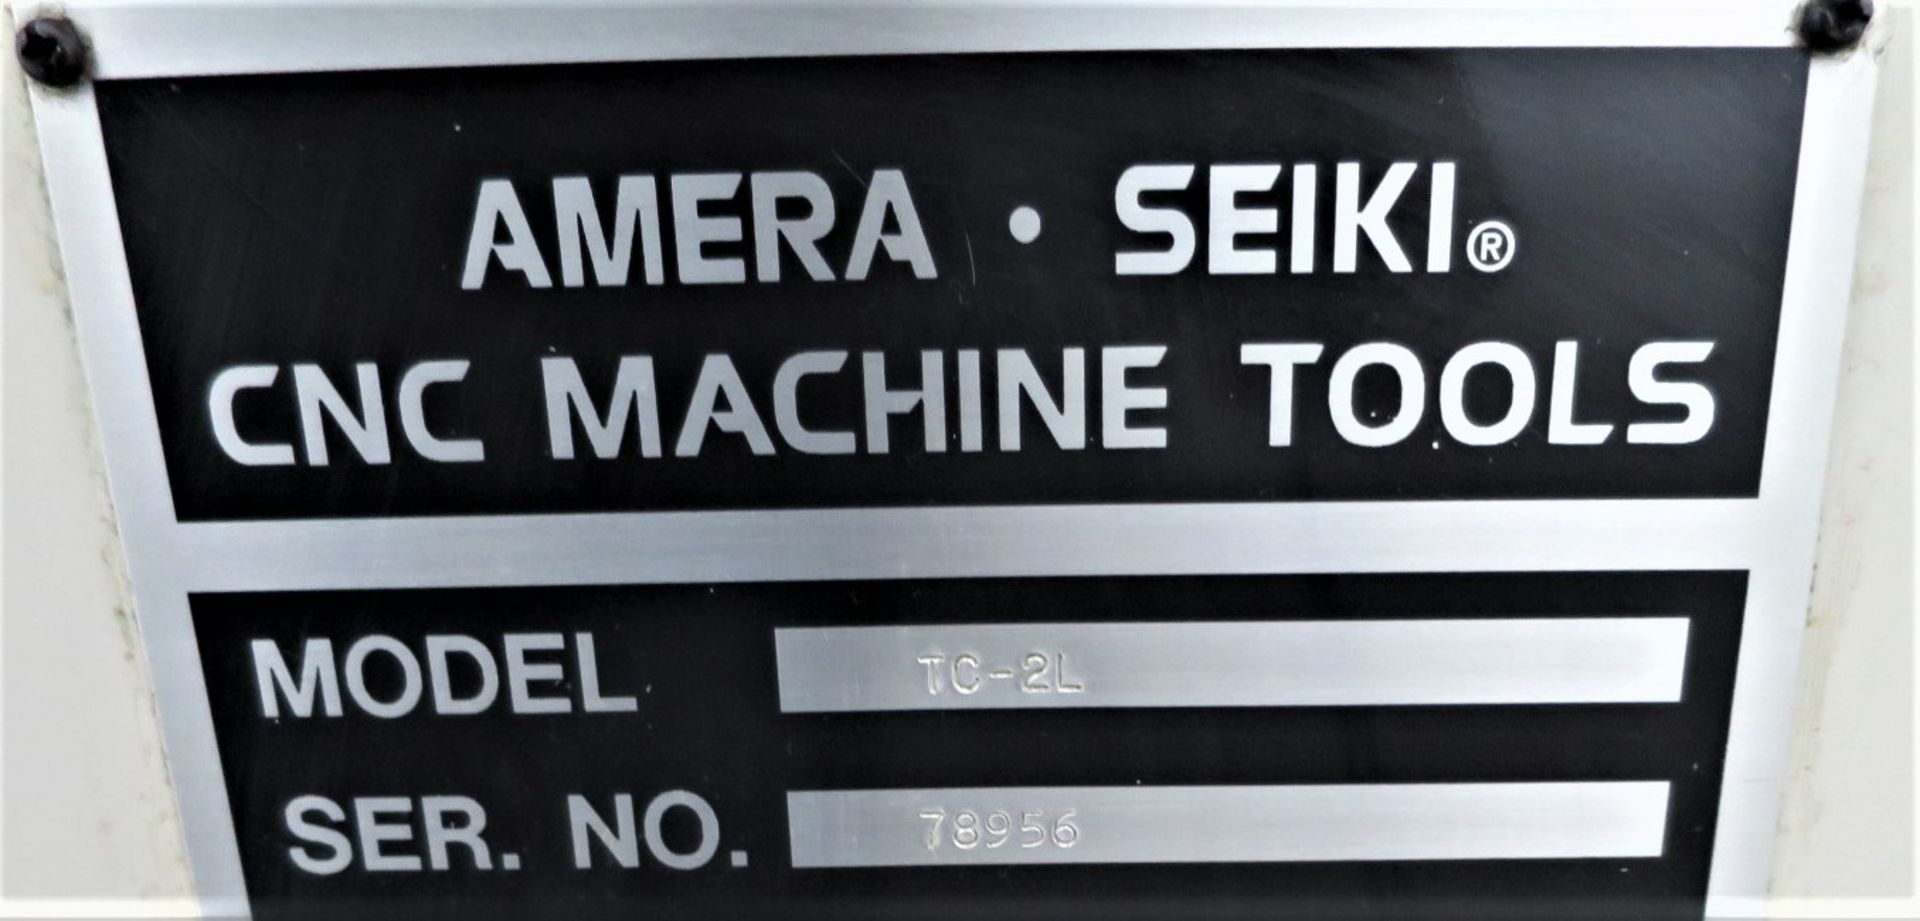 Amera Seiki TC-2L CNC Lathe, S/N 78956 - Image 7 of 7